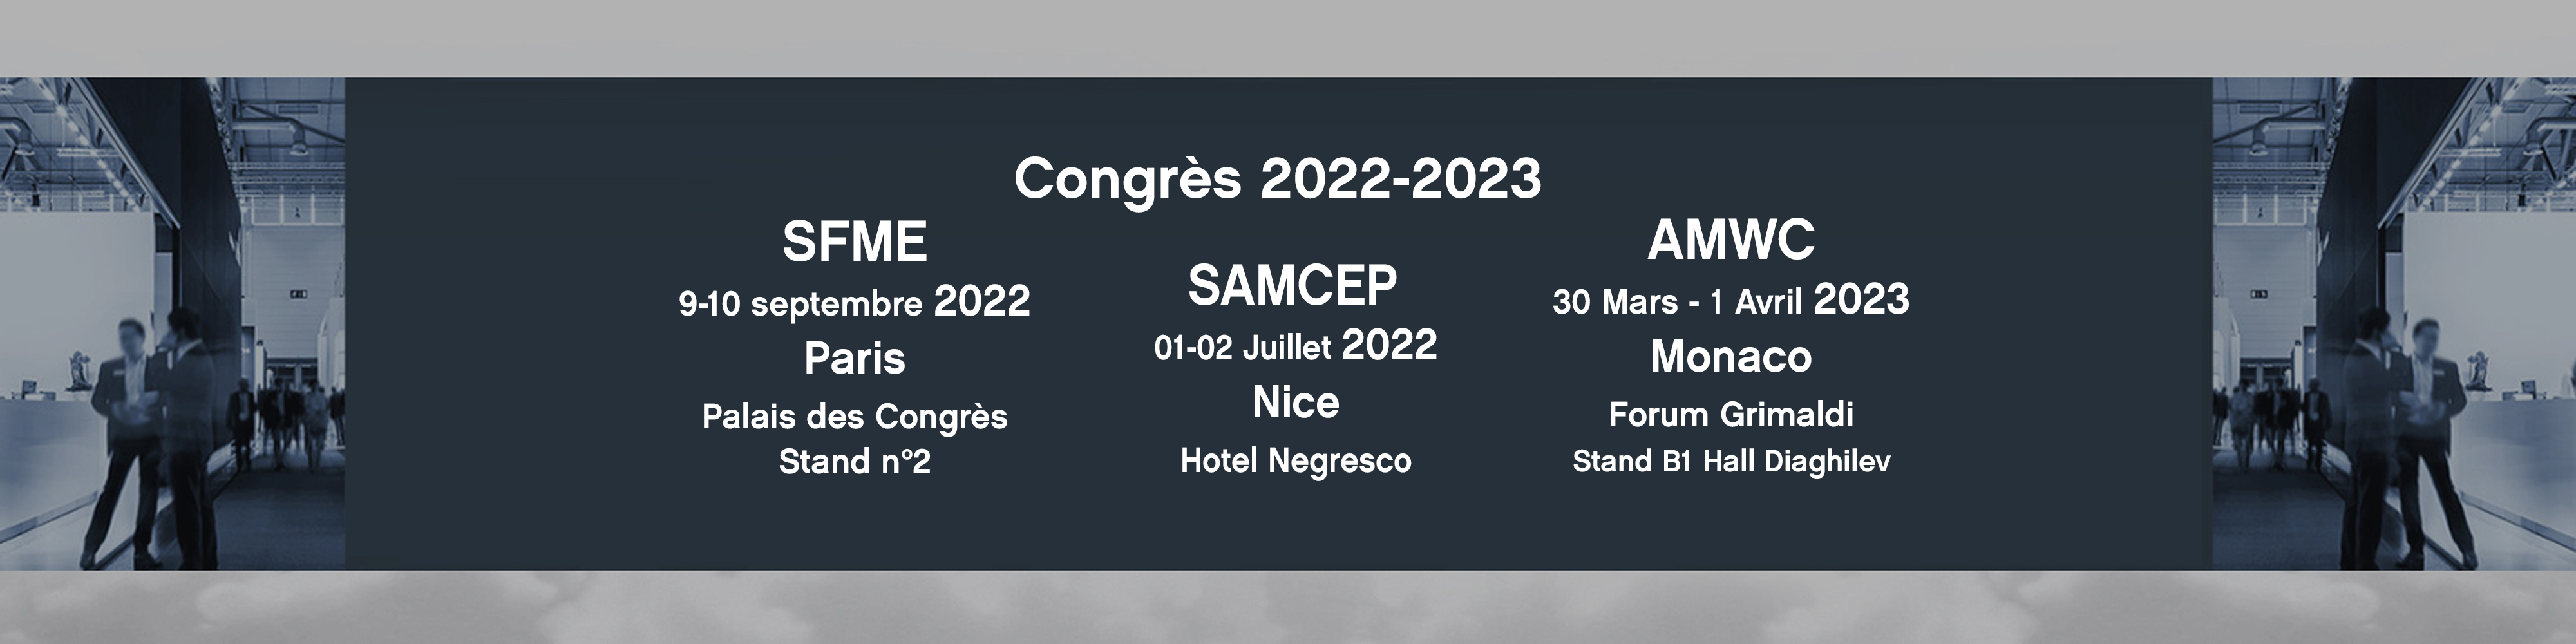 https://www.capactuel.com/storage/app/media/Accueil/banniere-congres-2022-2023v3.jpg